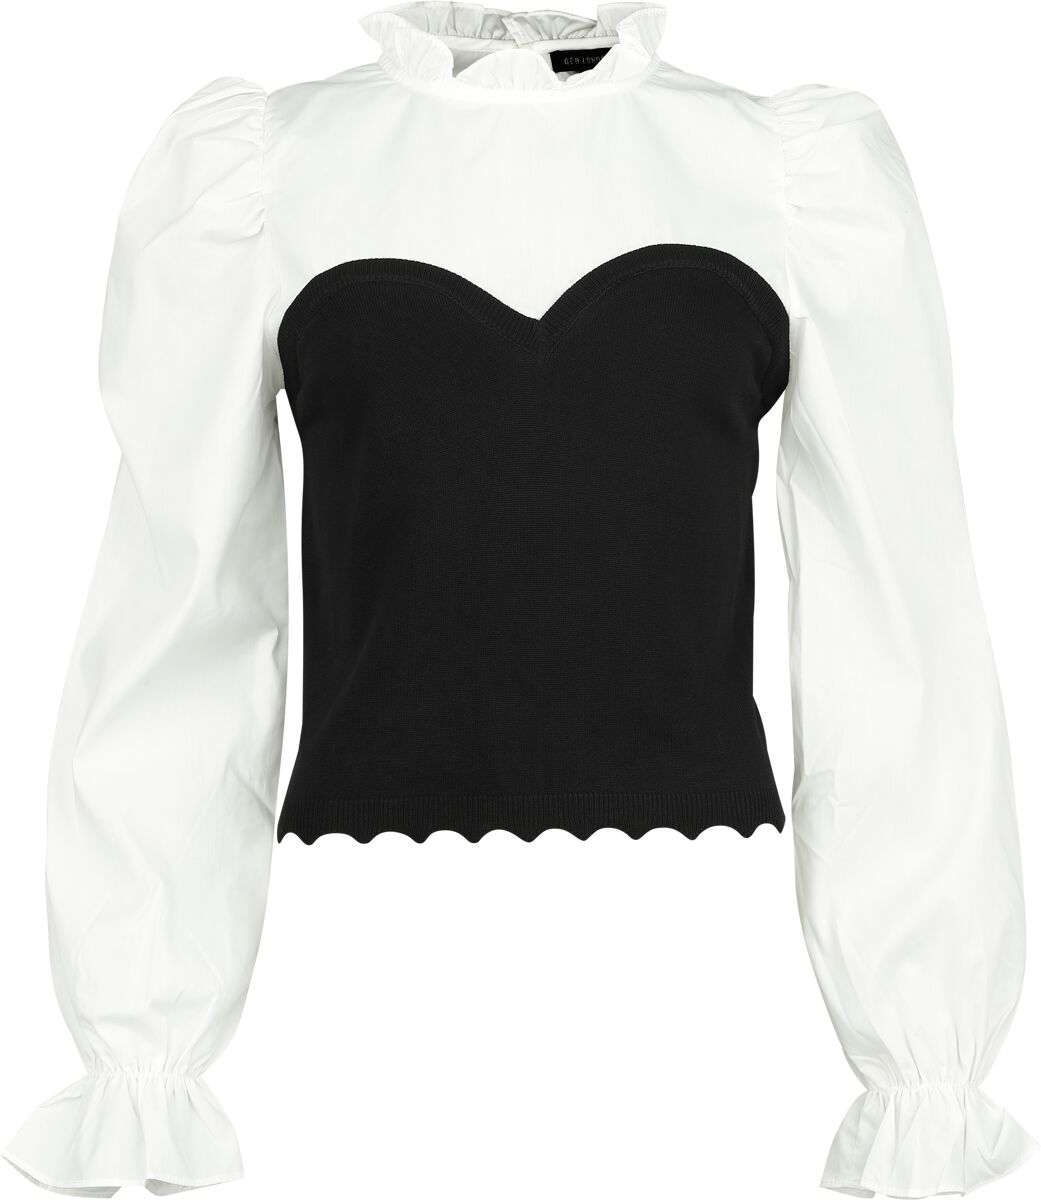 QED London Corset Detail Frill Collar Puff Sleeve Shirt Bluse schwarz weiß in M